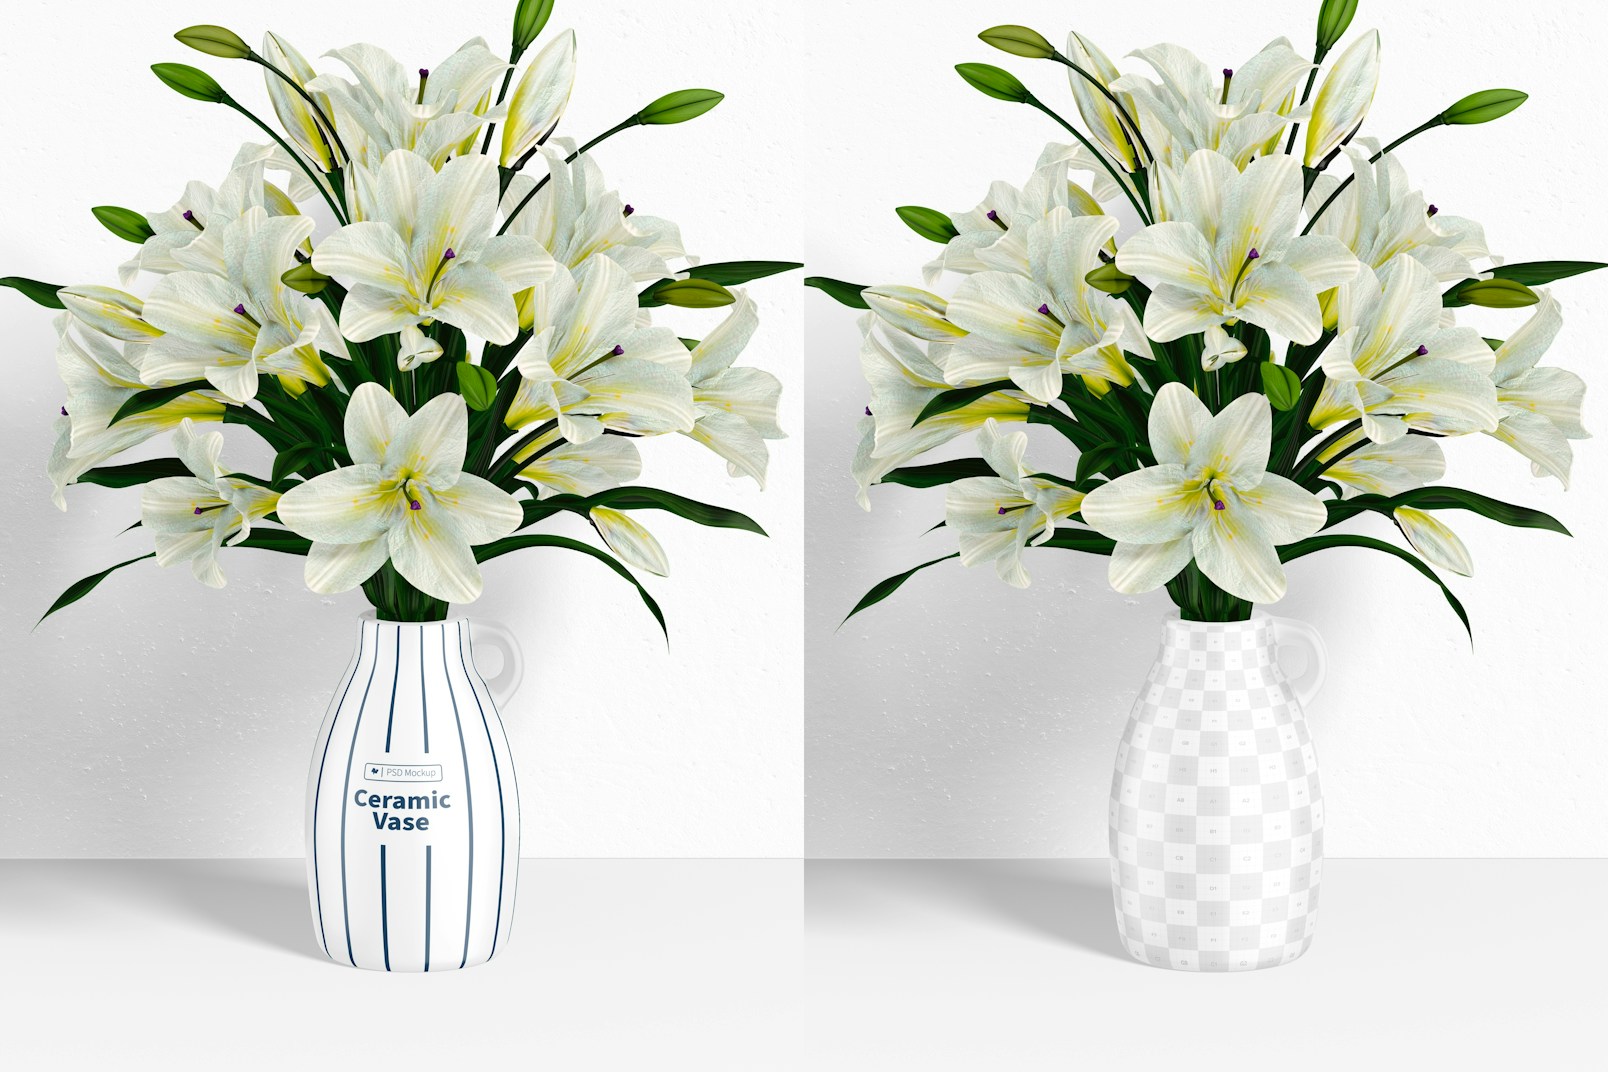 Ceramic Vase Mockup, with Flowers